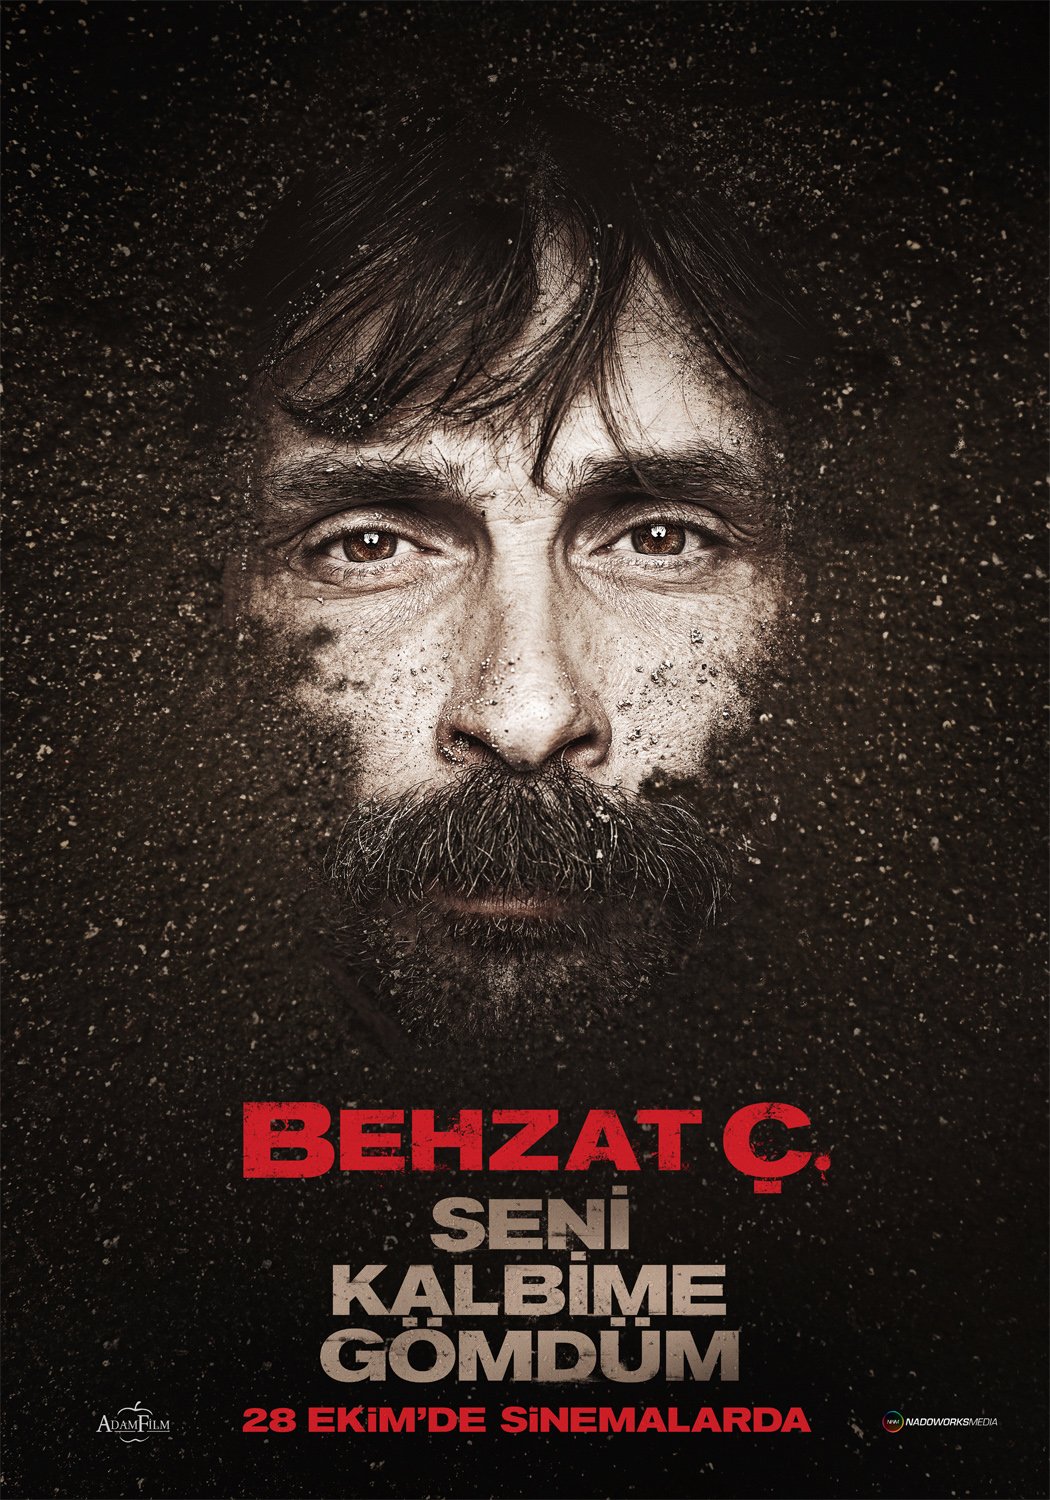 Behzat C. - Seni kalbime gomdum movie